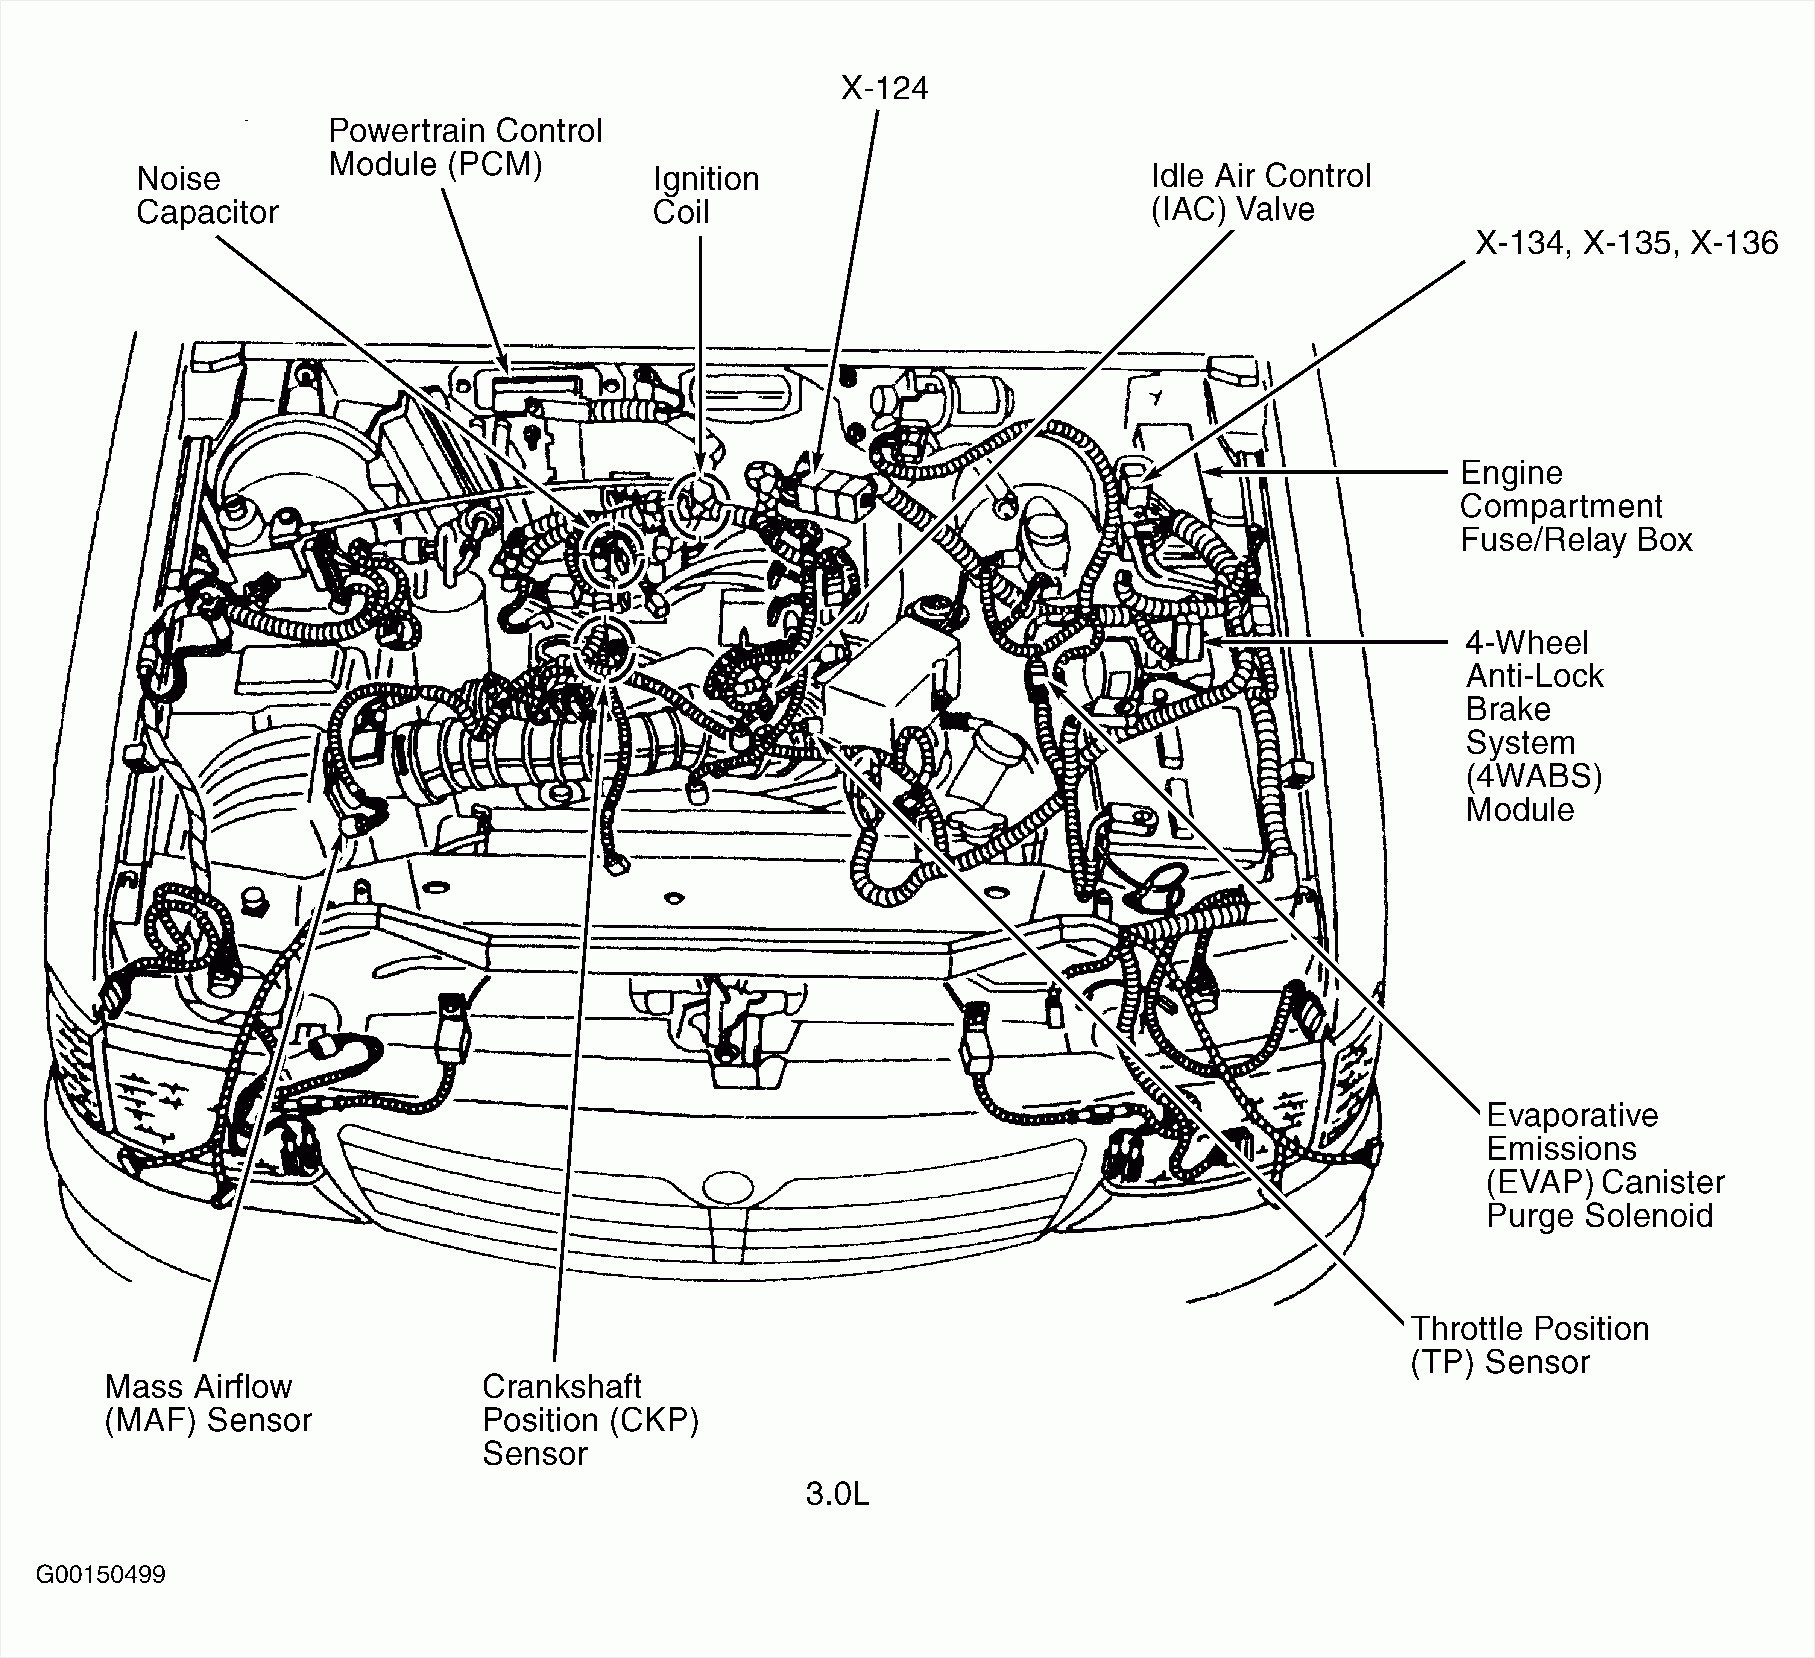 2002 Chevy Trailblazer Engine Diagram Chevy 2 8 Engine Diagram Schema Wiring Diagram Of 2002 Chevy Trailblazer Engine Diagram